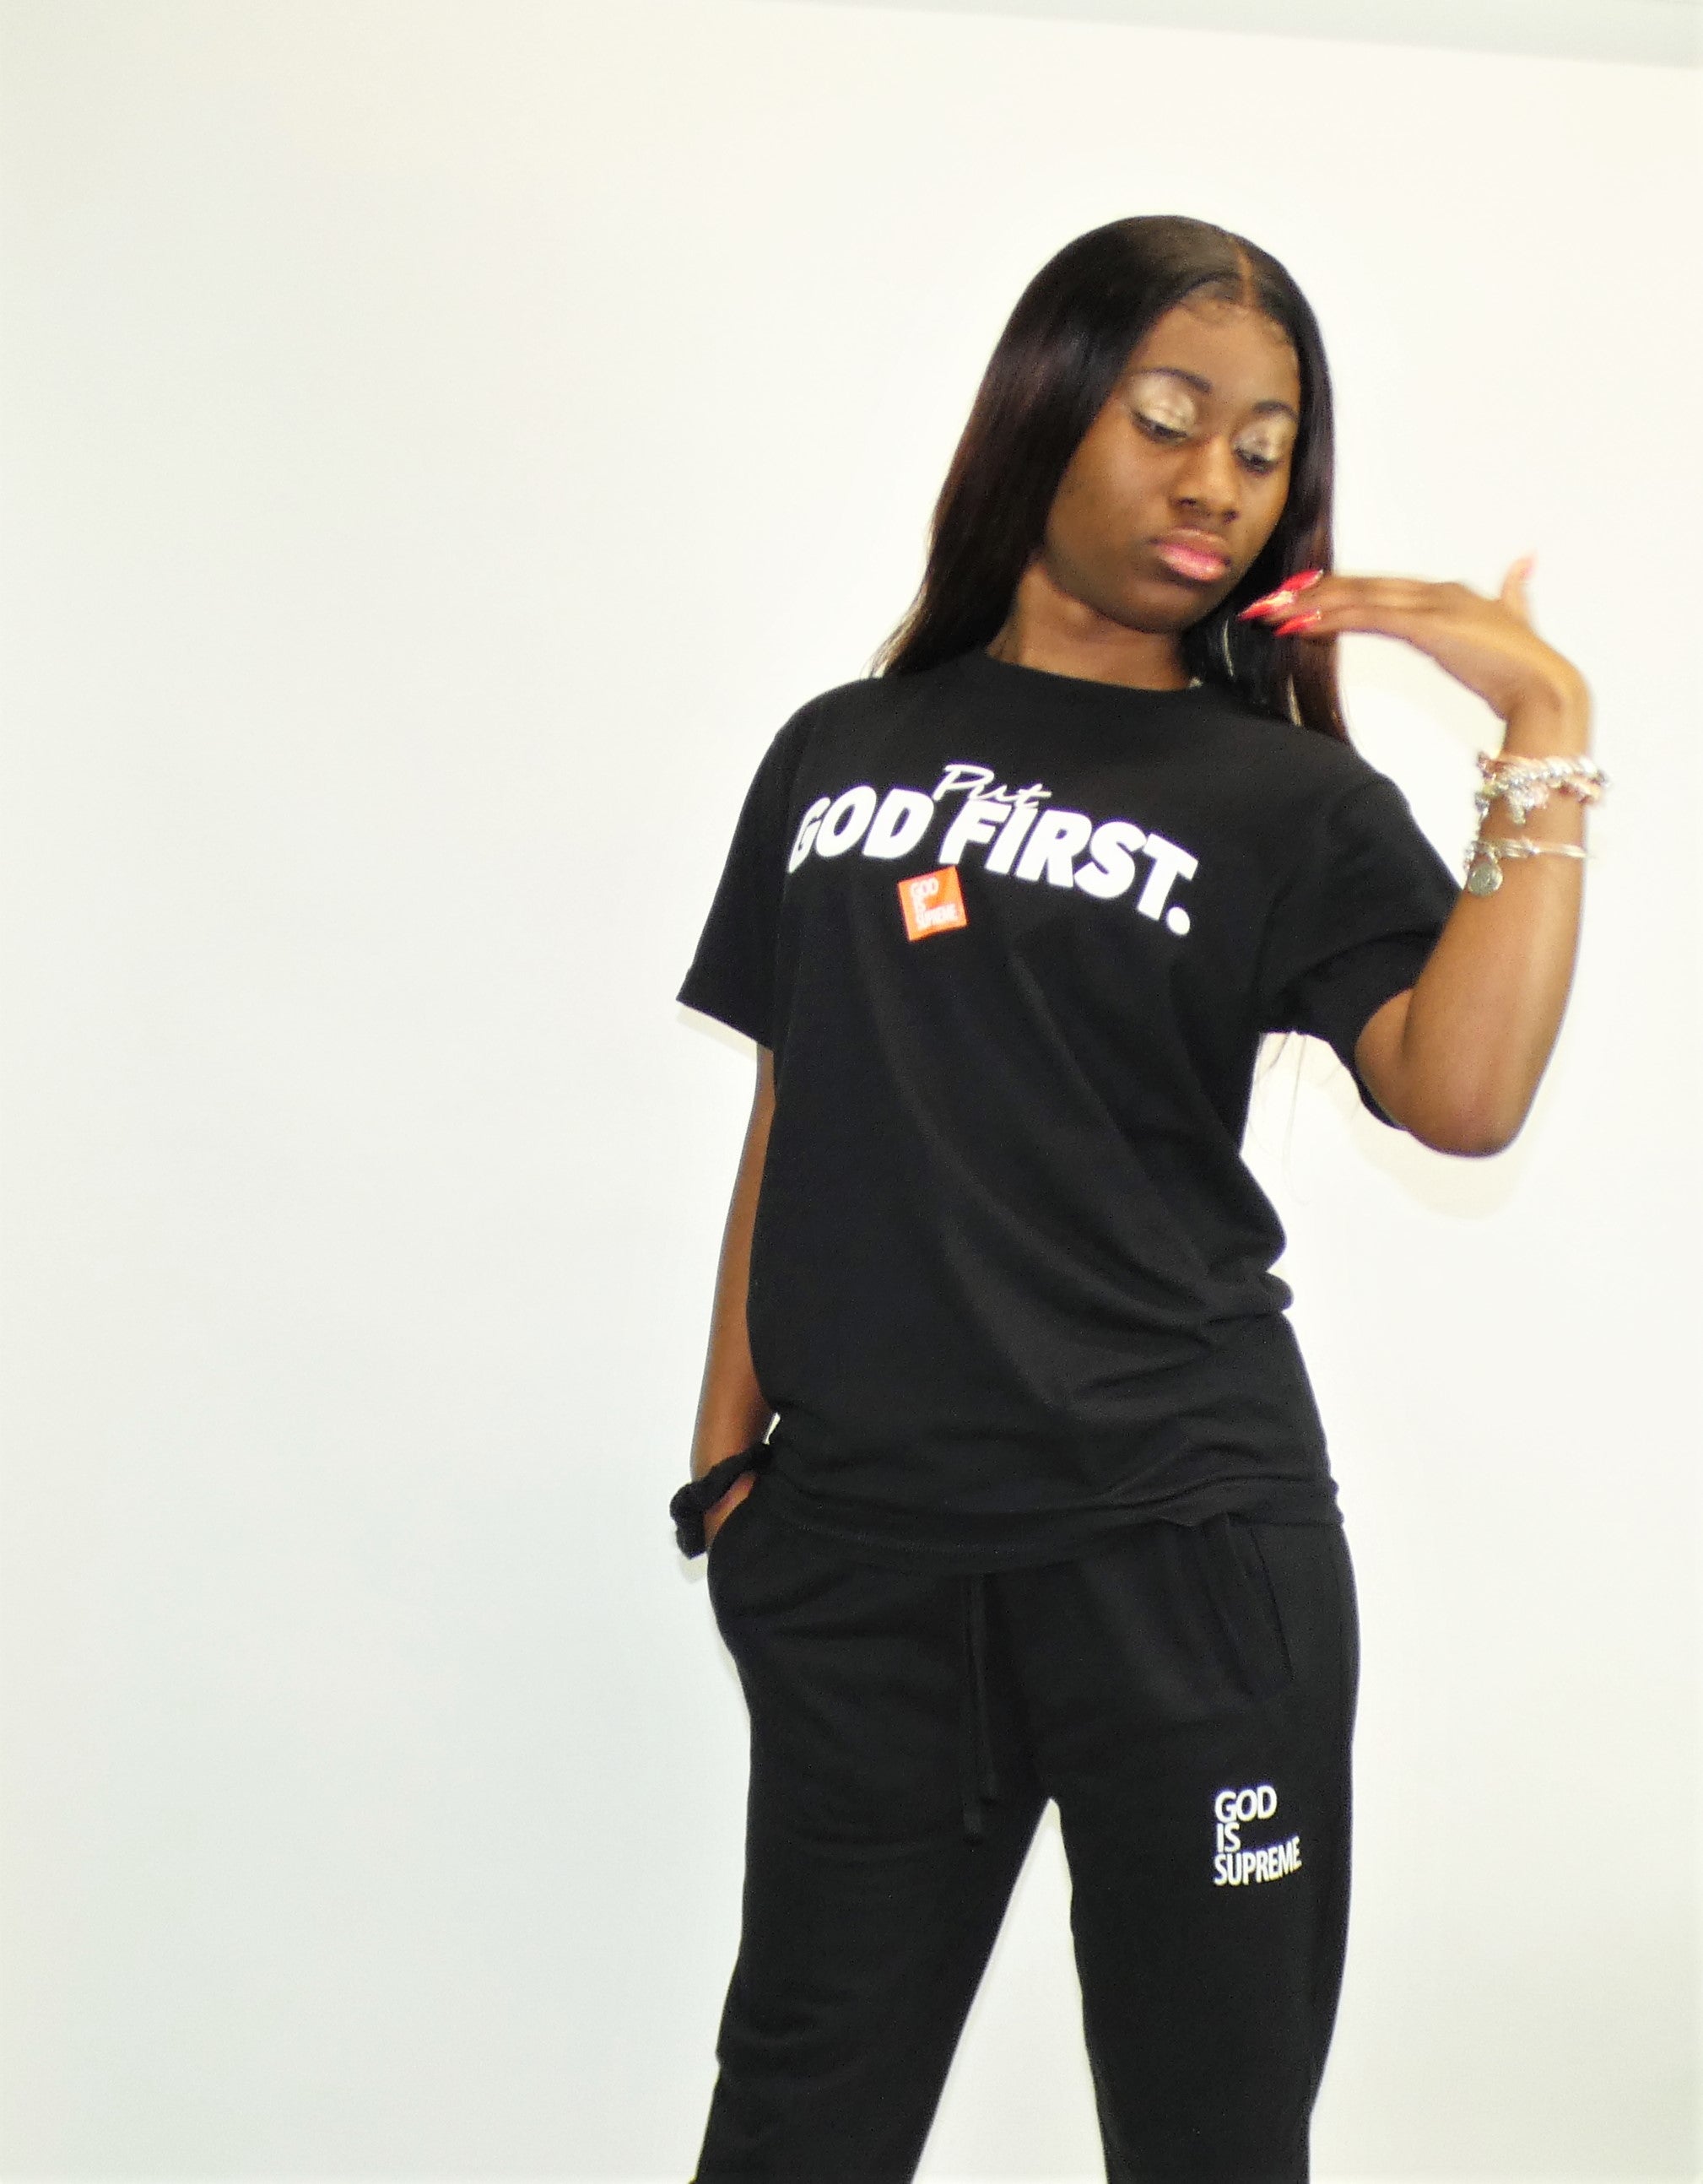 Put God First with Box / Black T-shirt